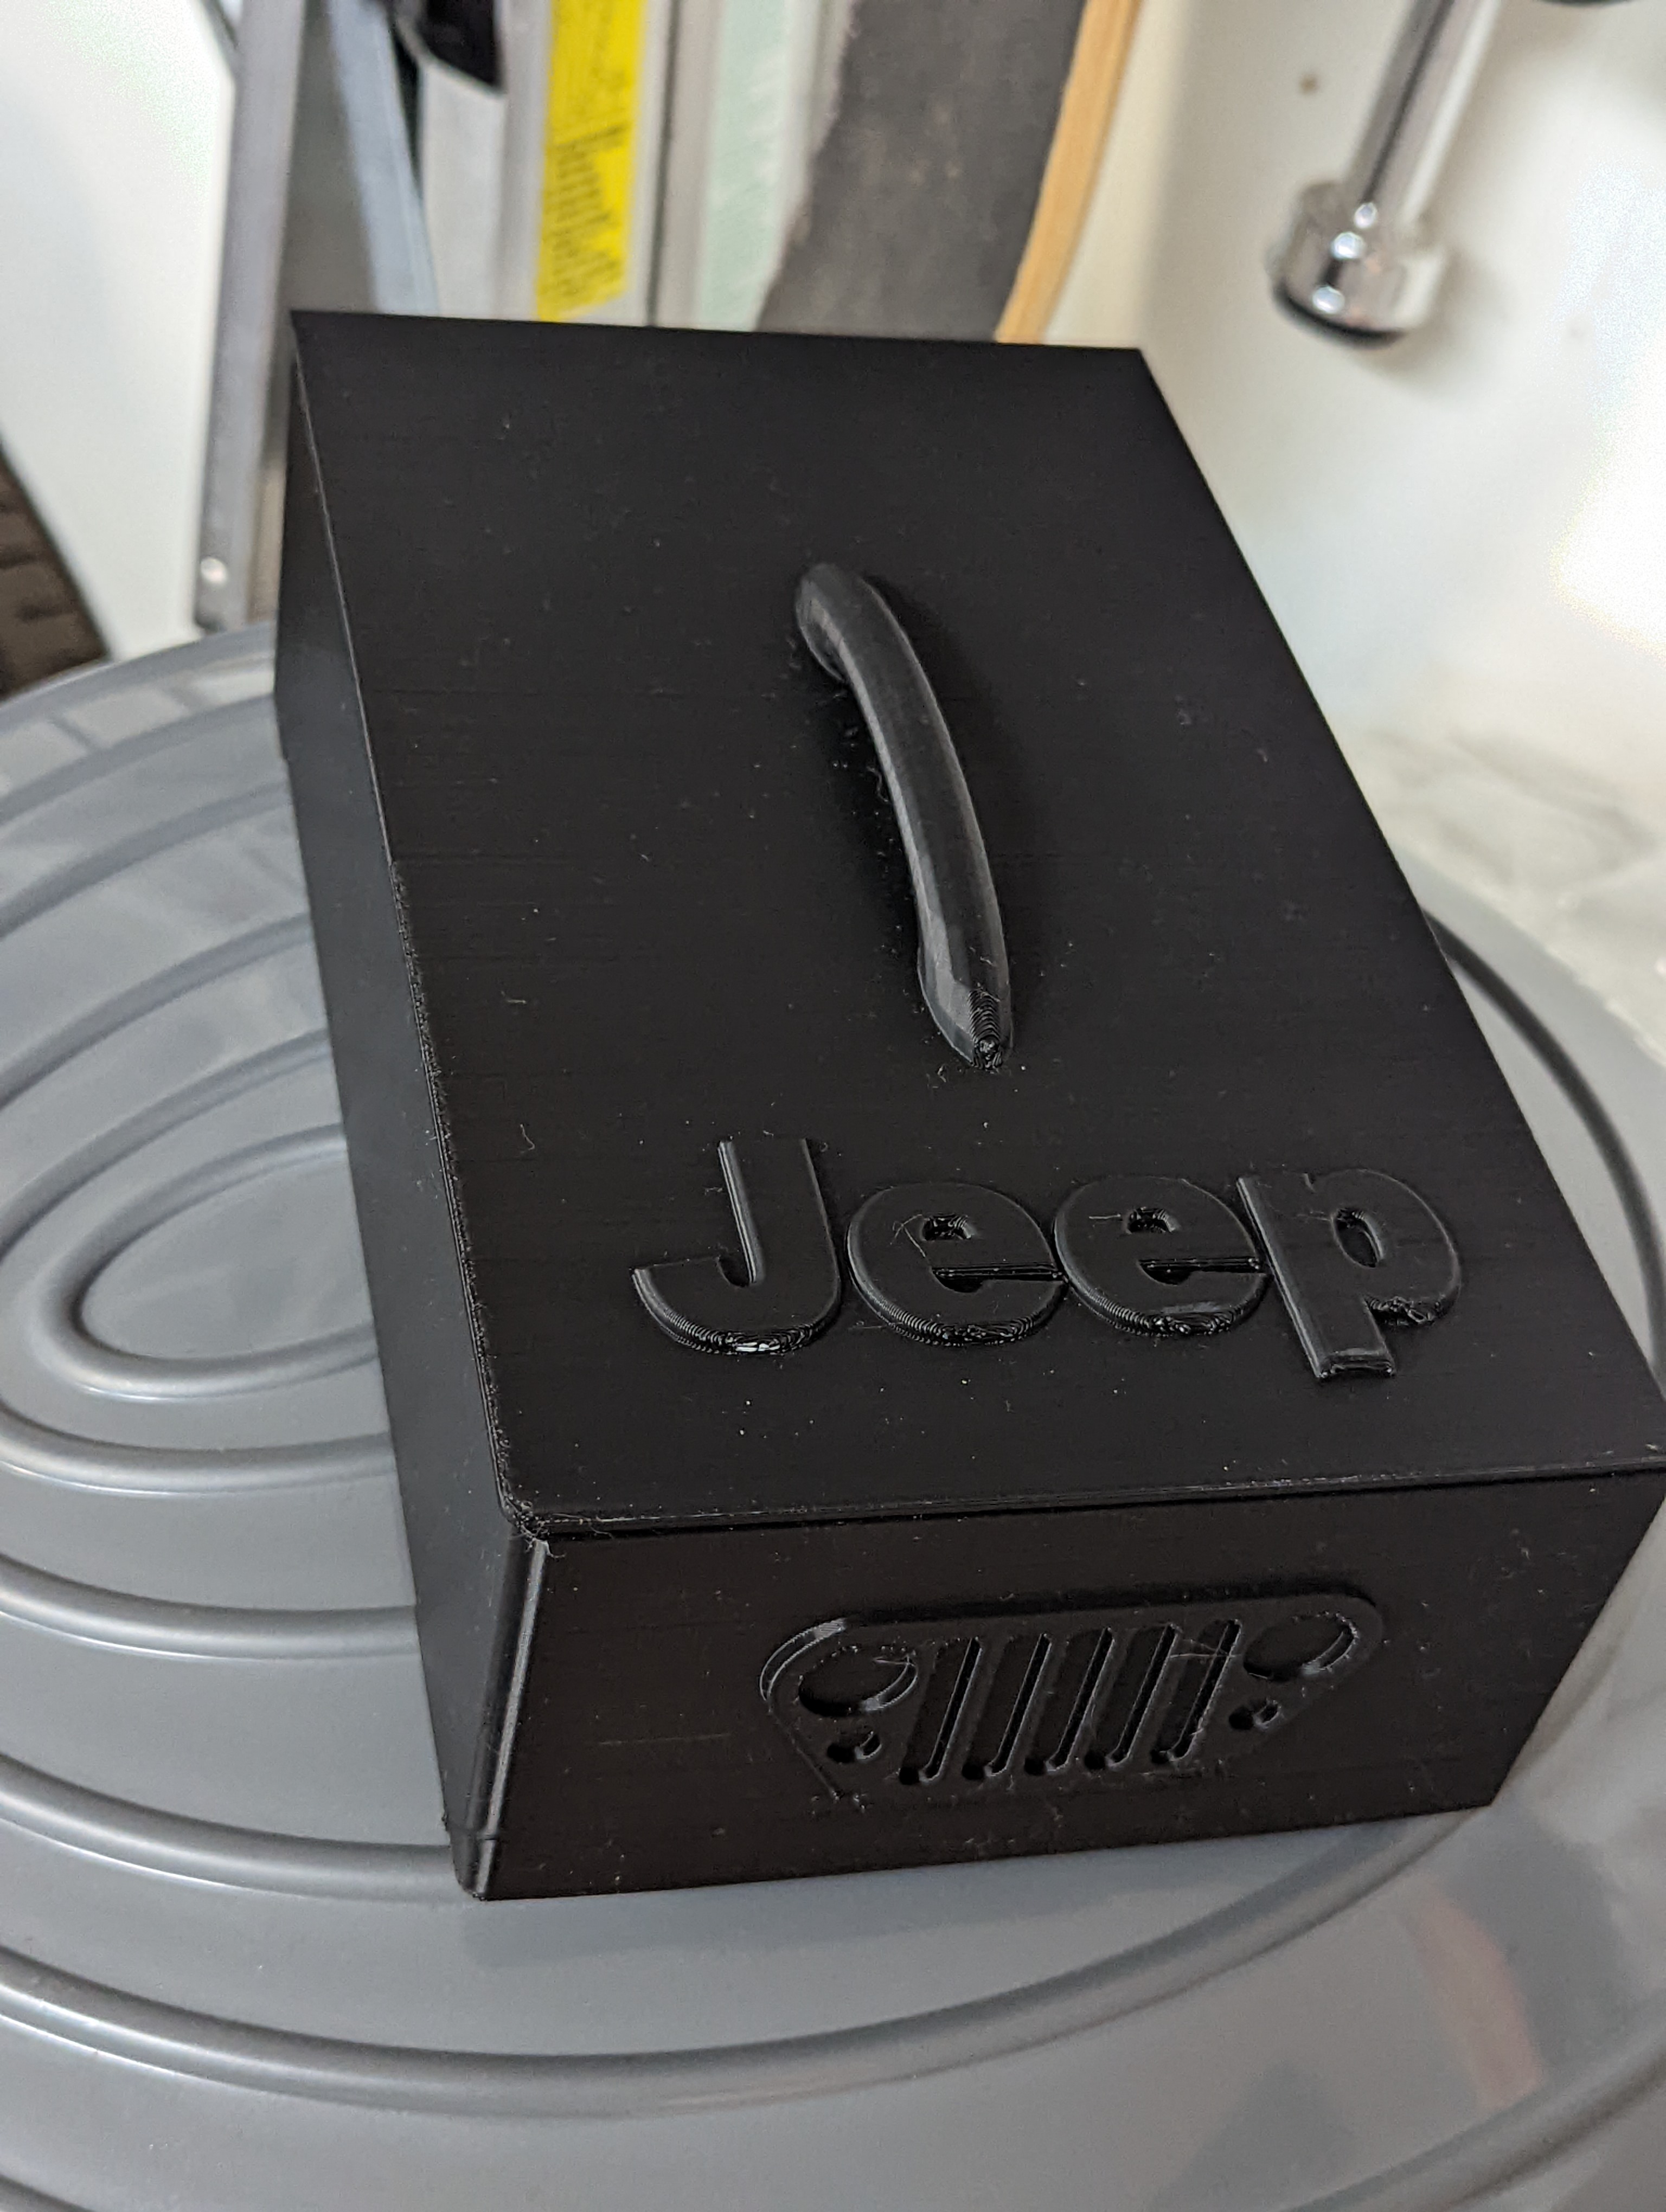 Jeep TJ rear fender storage box